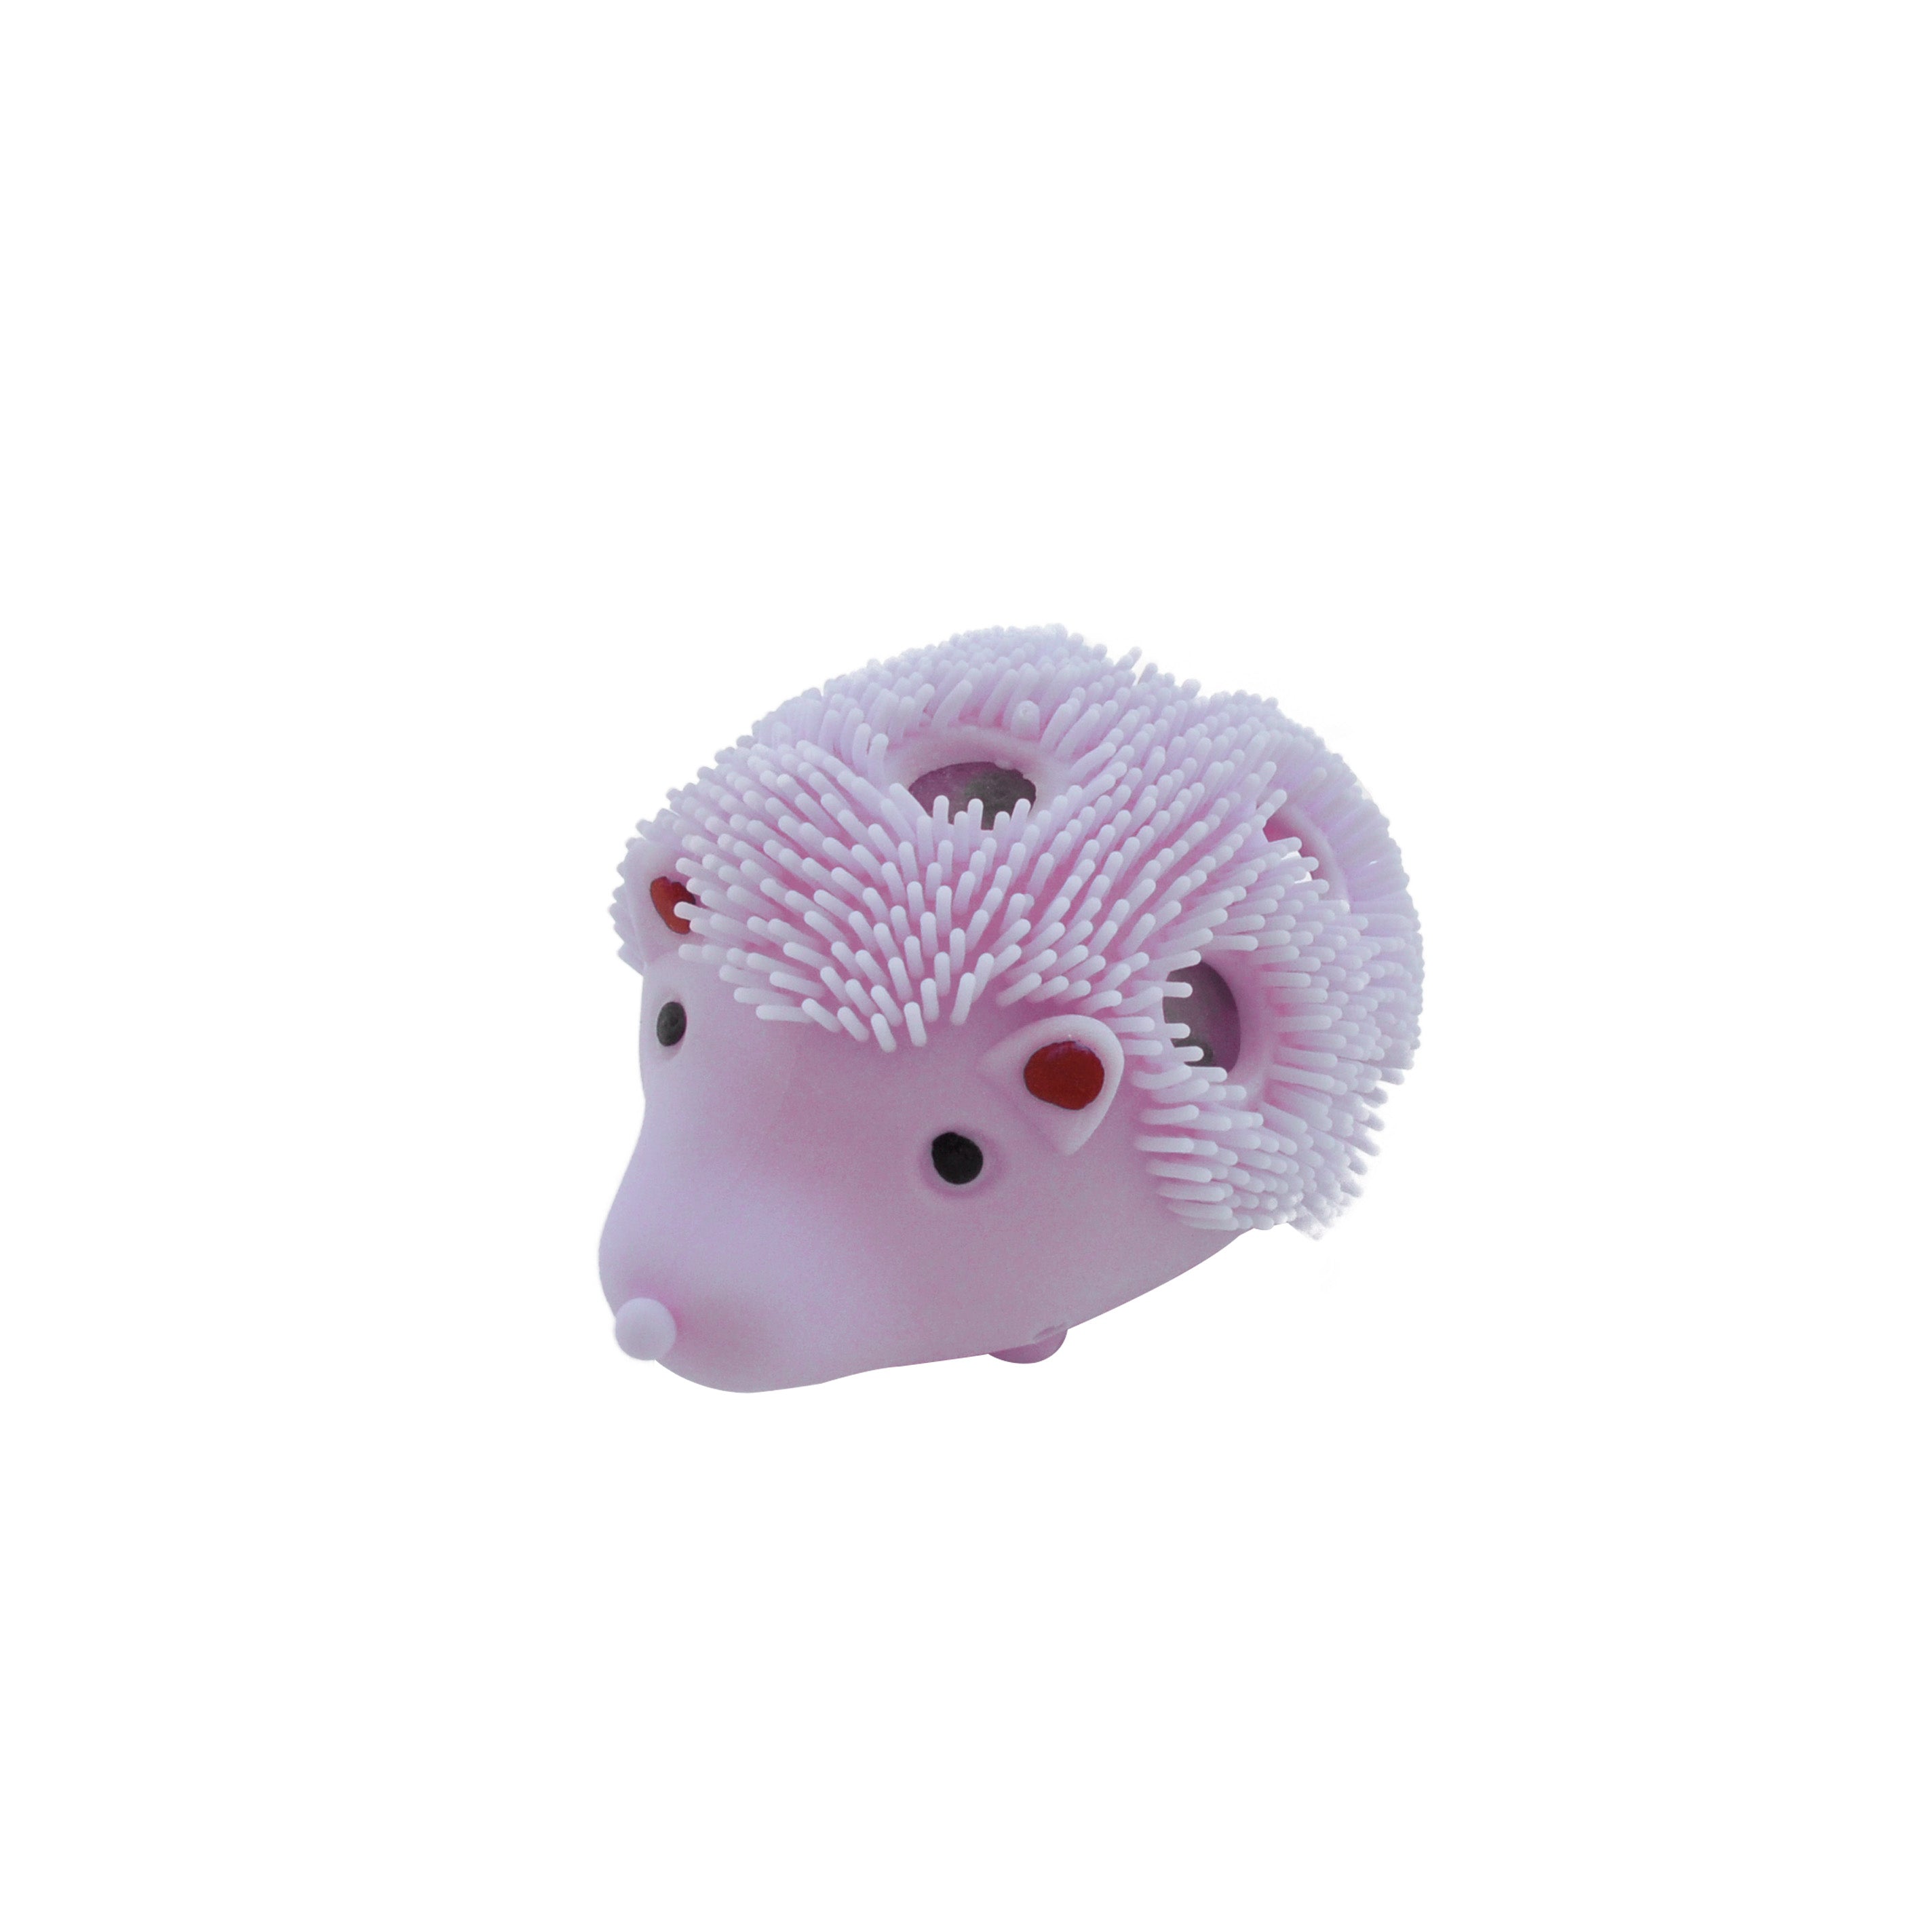 Squishy Hedgehog - Pink